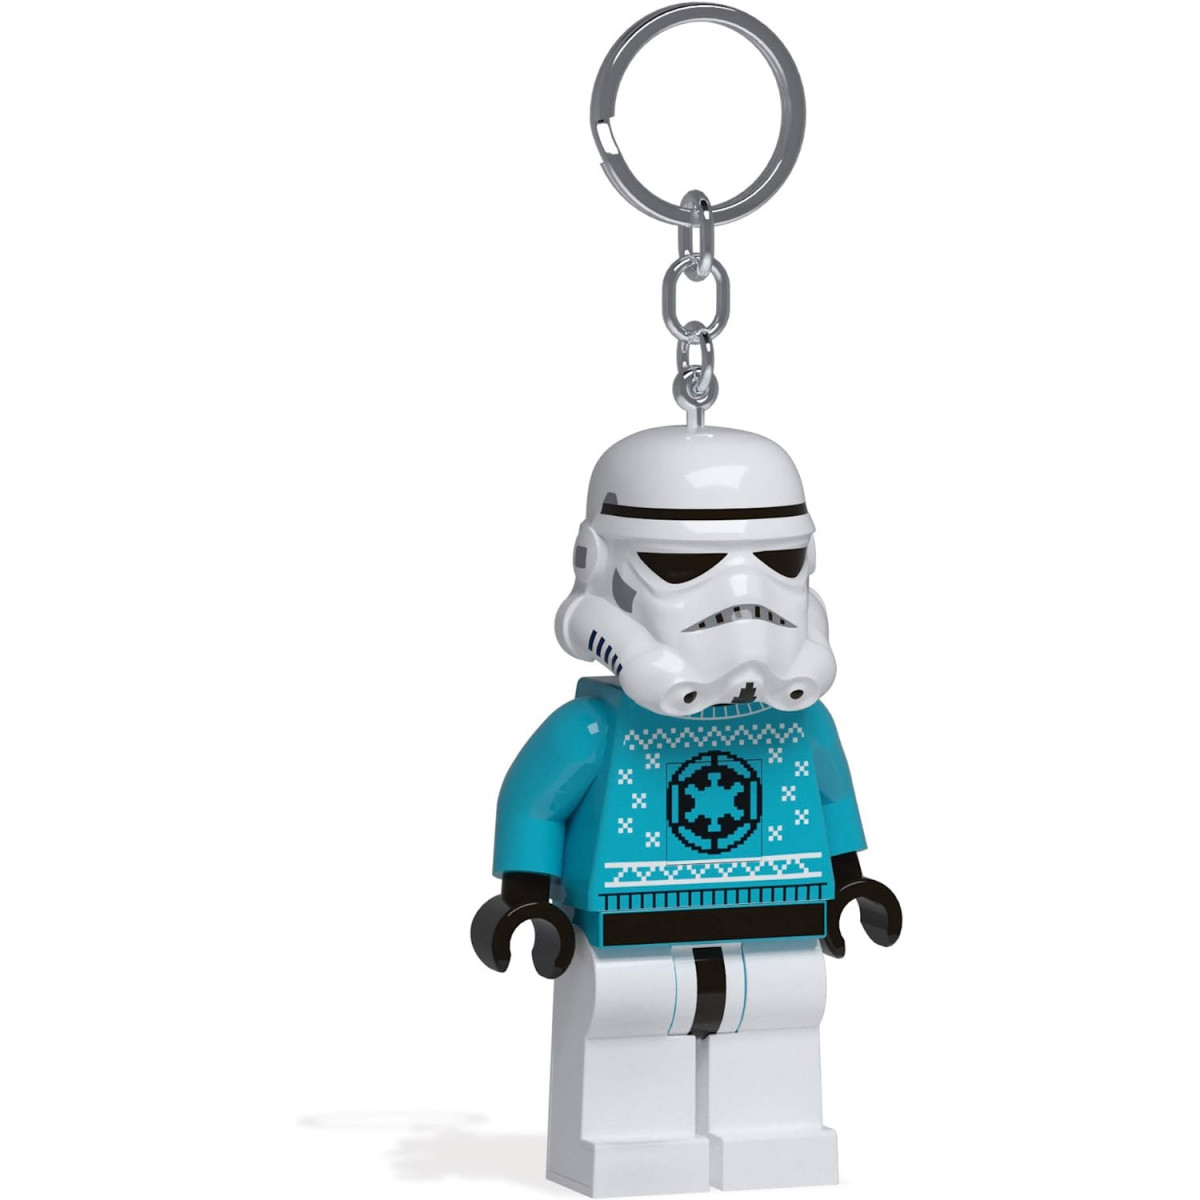 Lego LGL-KE174 - Star Wars Stormtrooper christmas edition key light